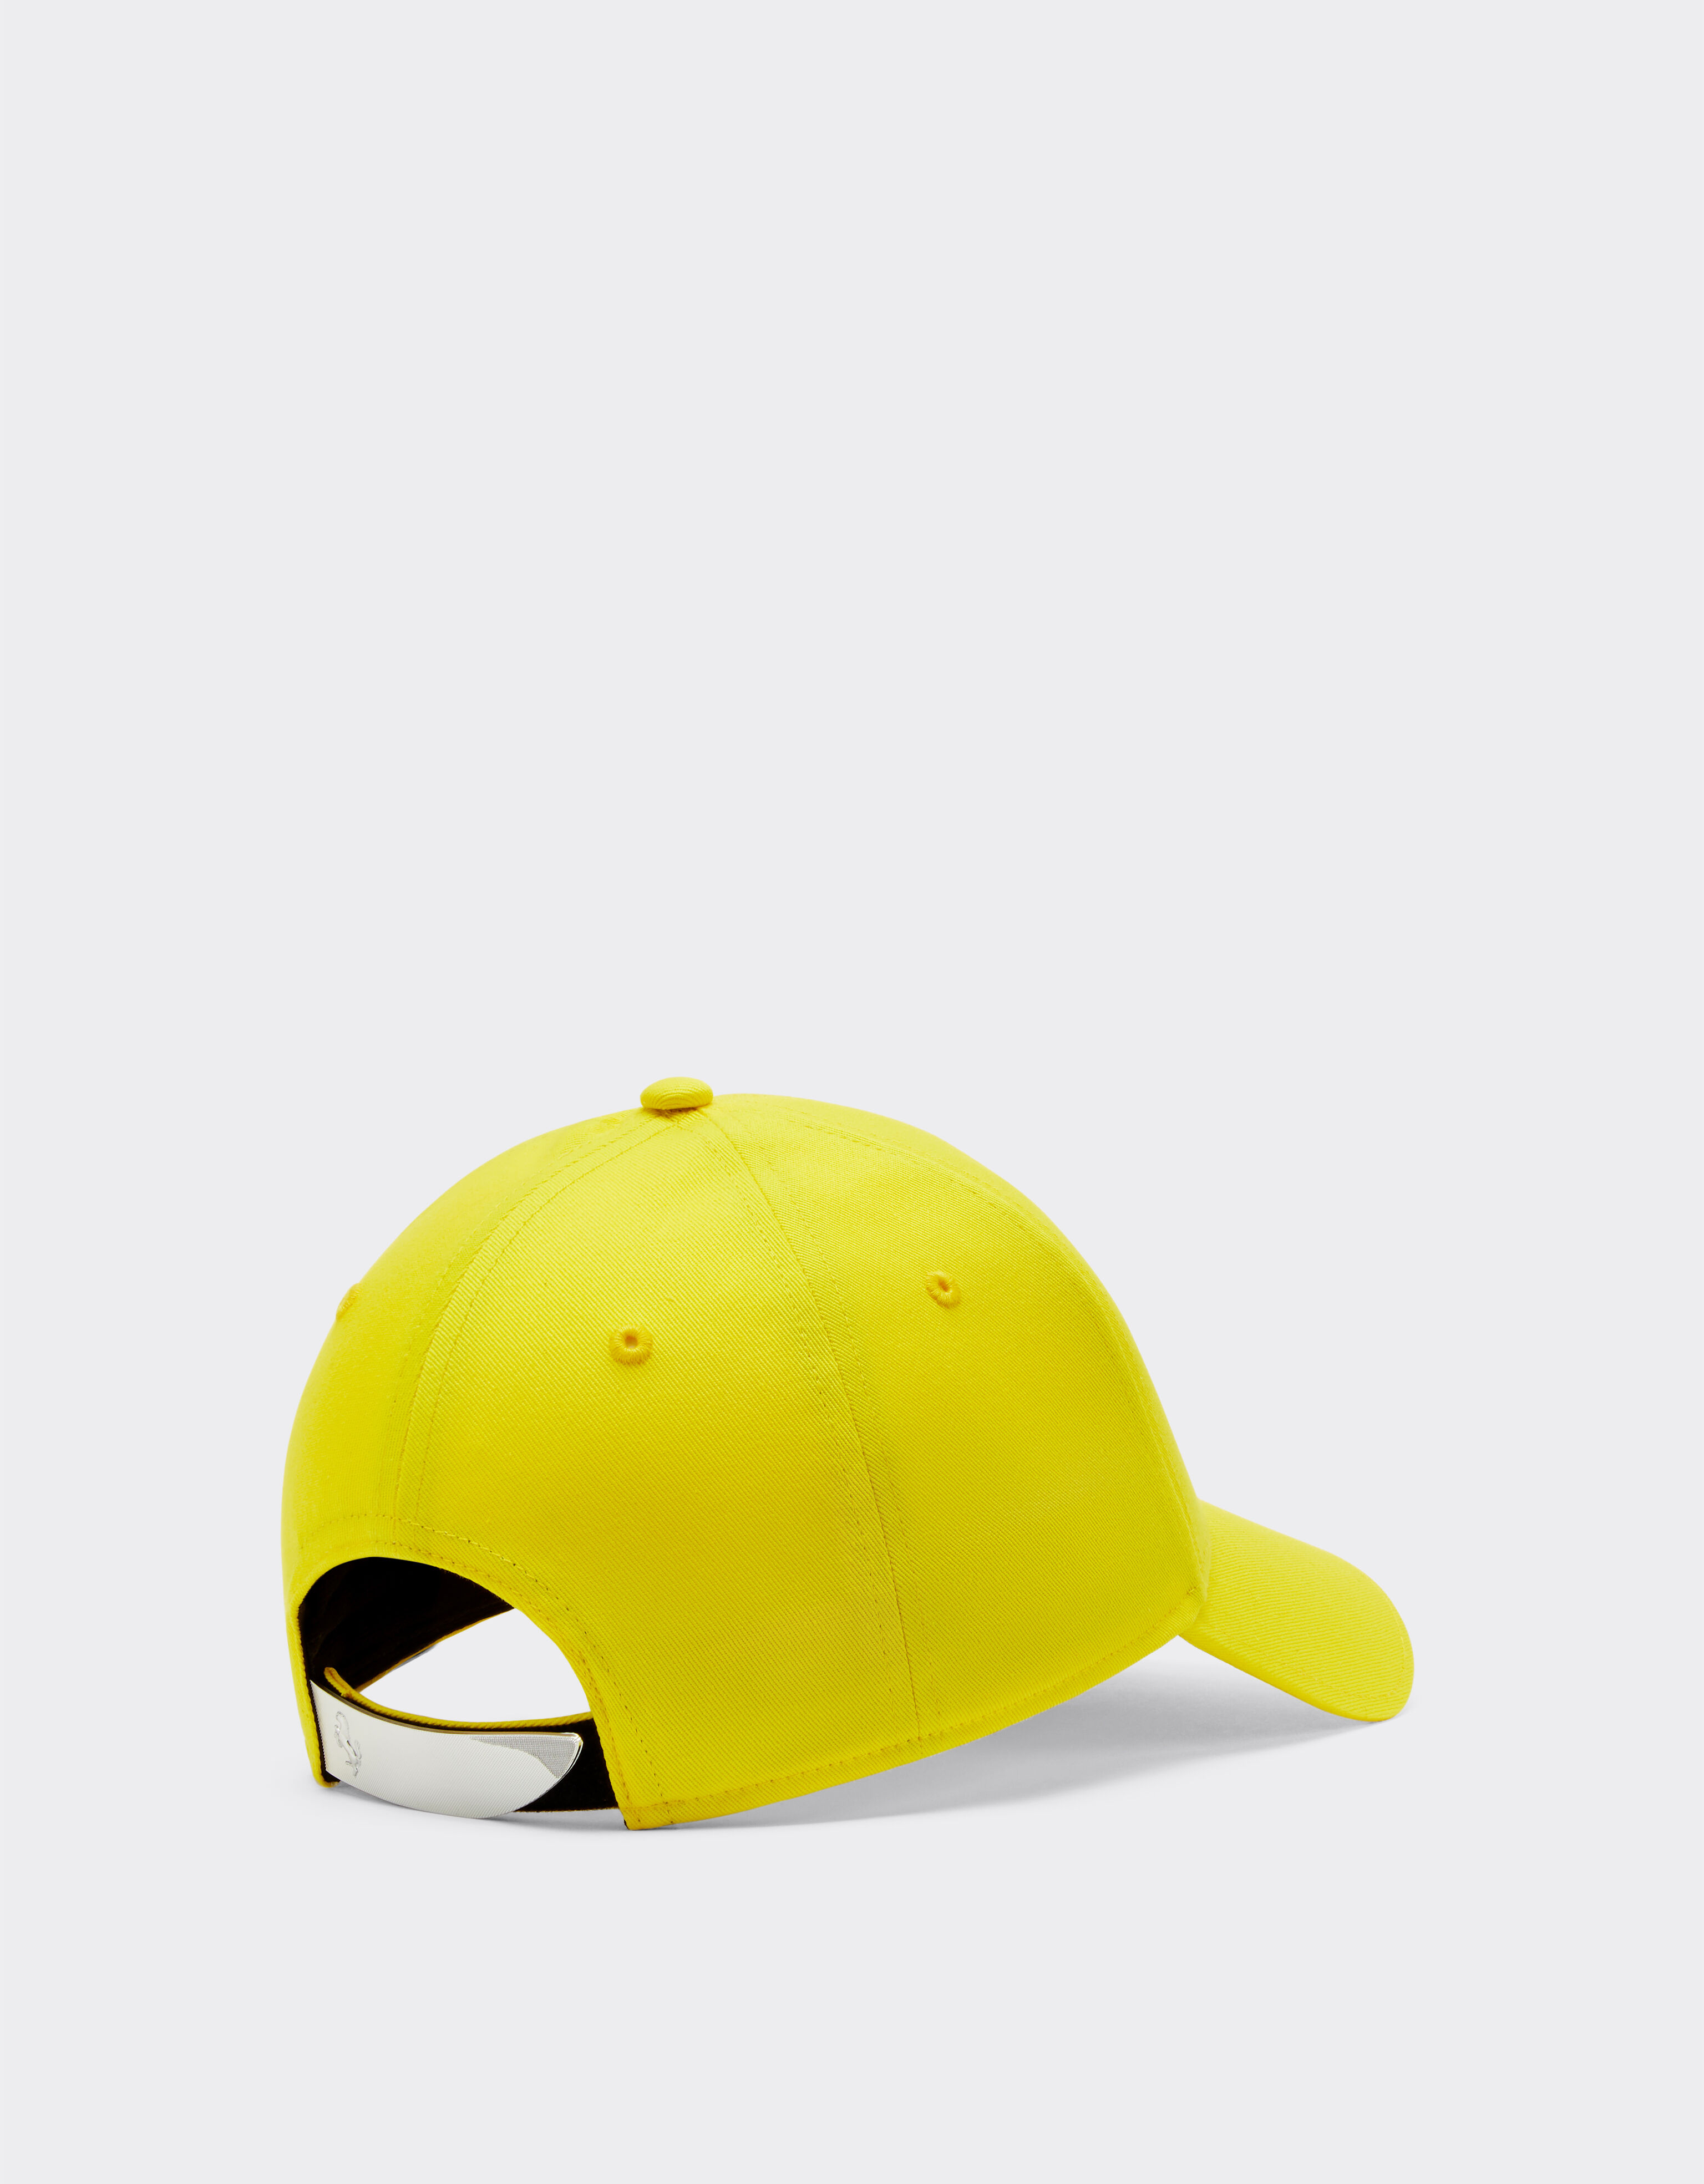 Ferrari Baseball hat with rubberised logo Giallo Modena 黄色 20403f